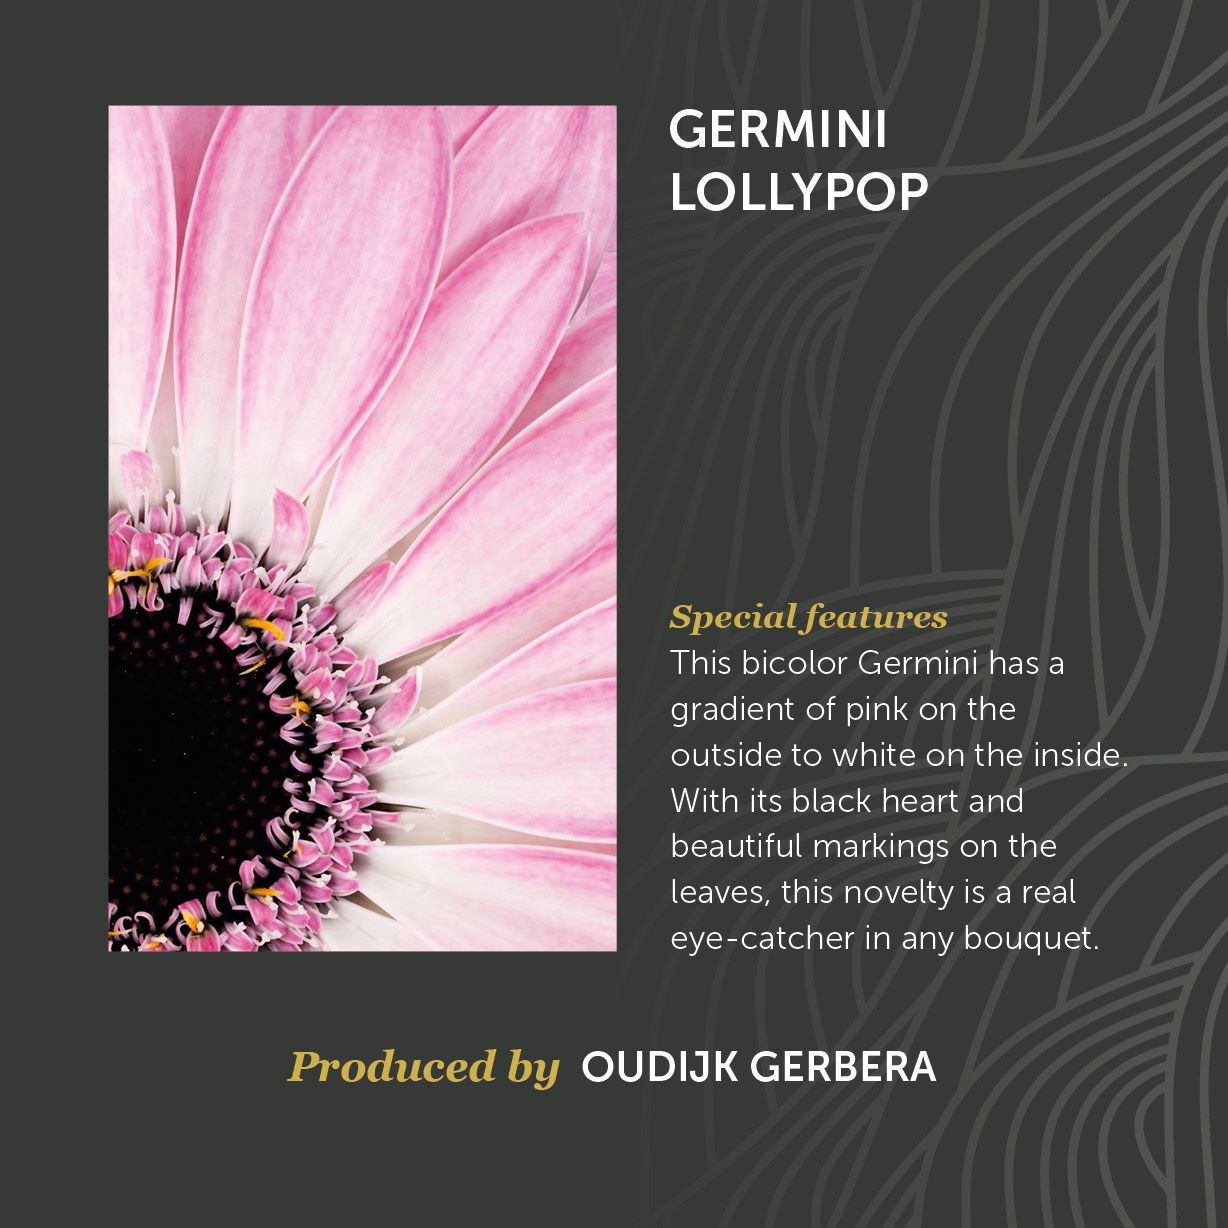 Germini Lollypop